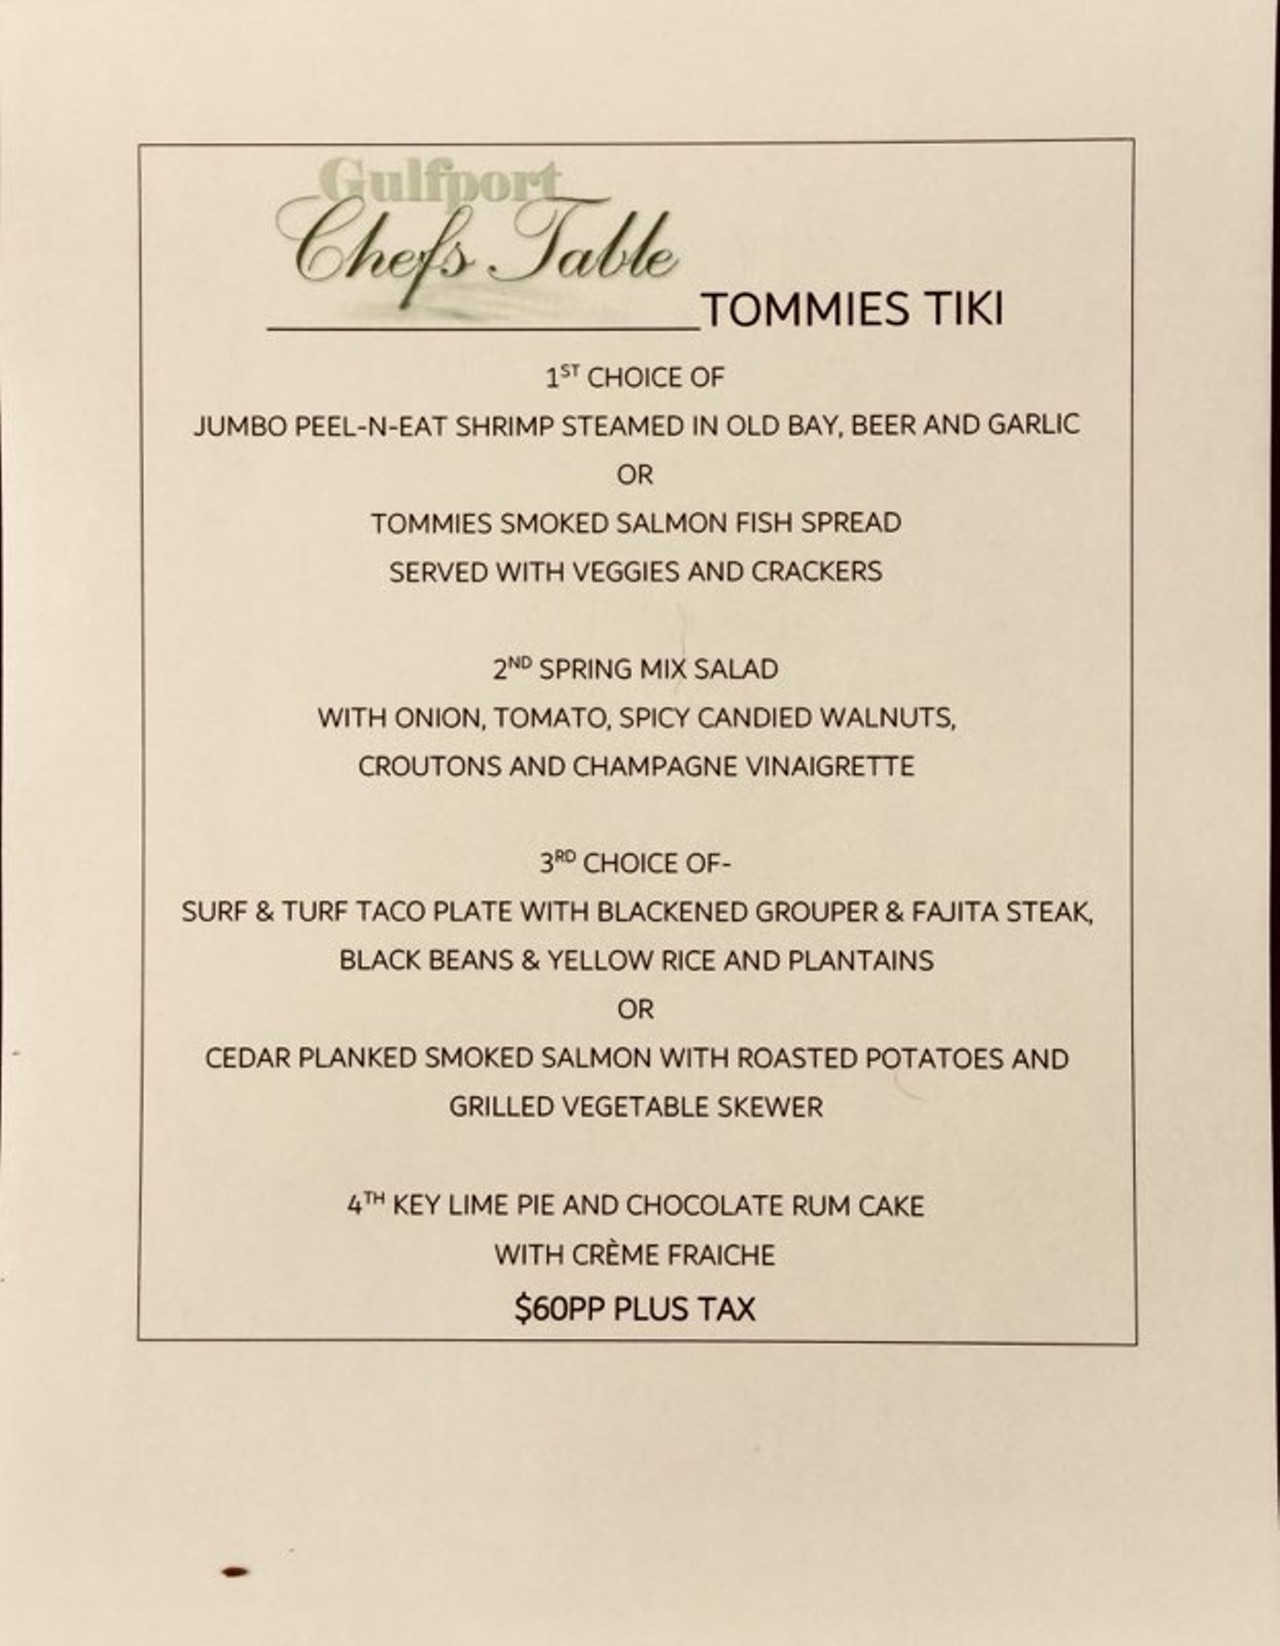 Gulfport Chef's Table 2018 Tommies Tiki menu